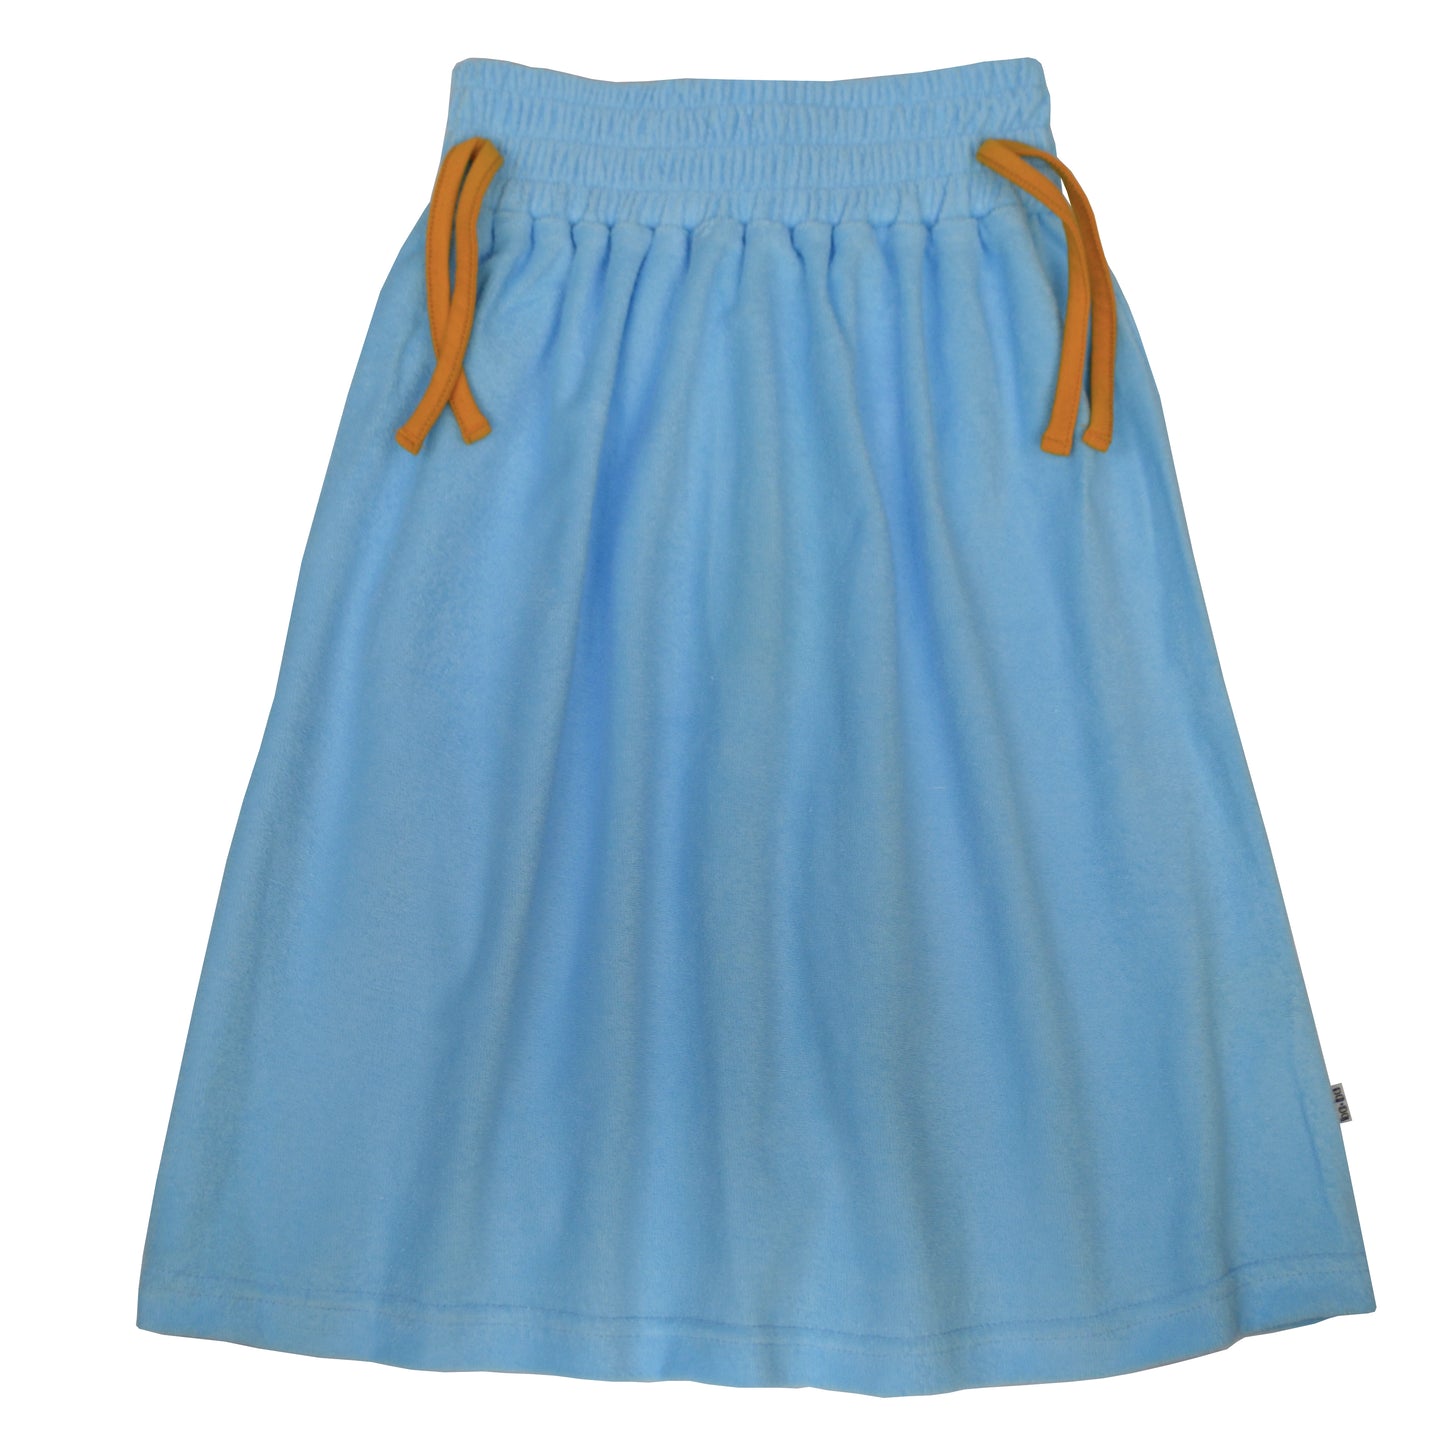 *Chaga Skirt - Alaskan Blue